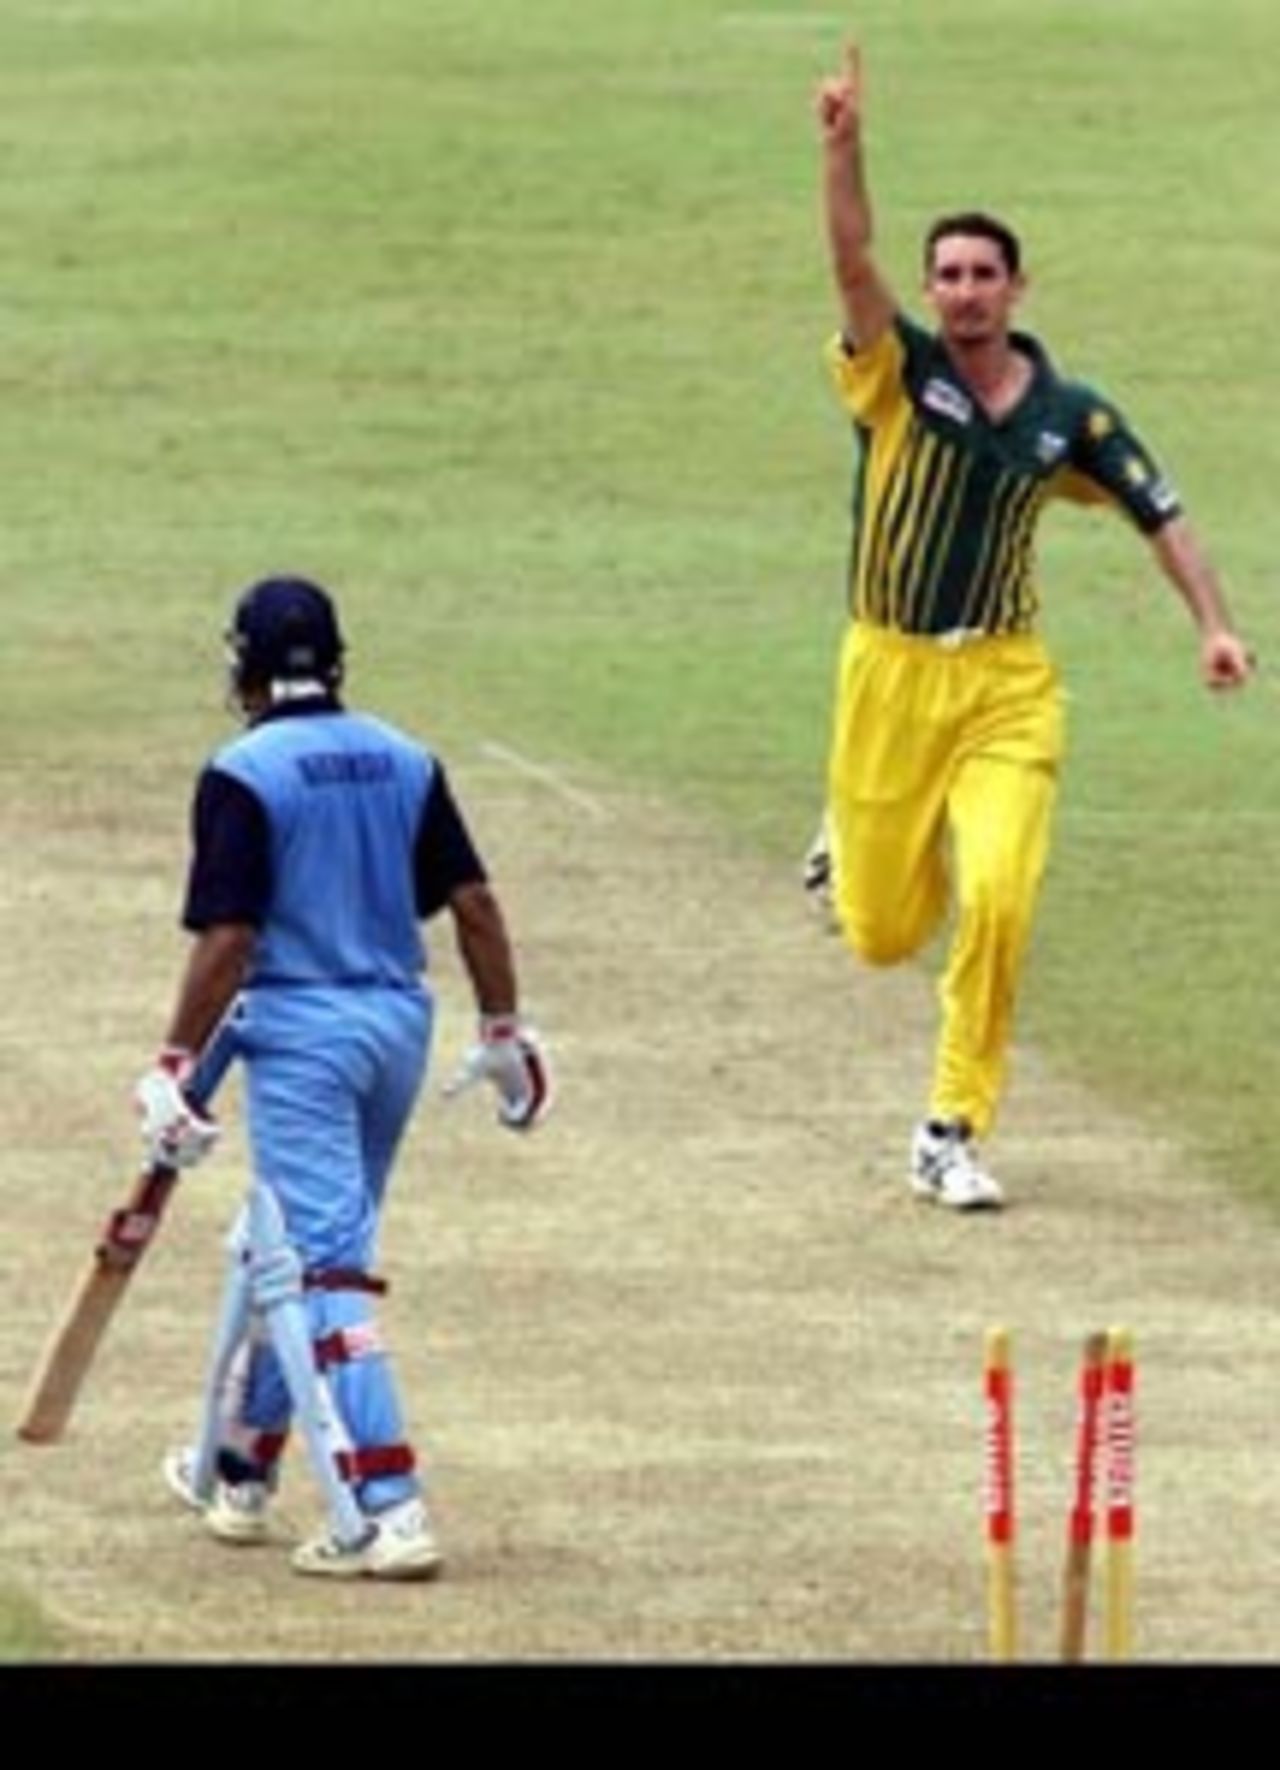 28th August 1999: Jason Gillespie of Australia bowls Khurasiya of India, during the match between India and Australia at Singhalese Stadium, Colombo, Sri Lanka.